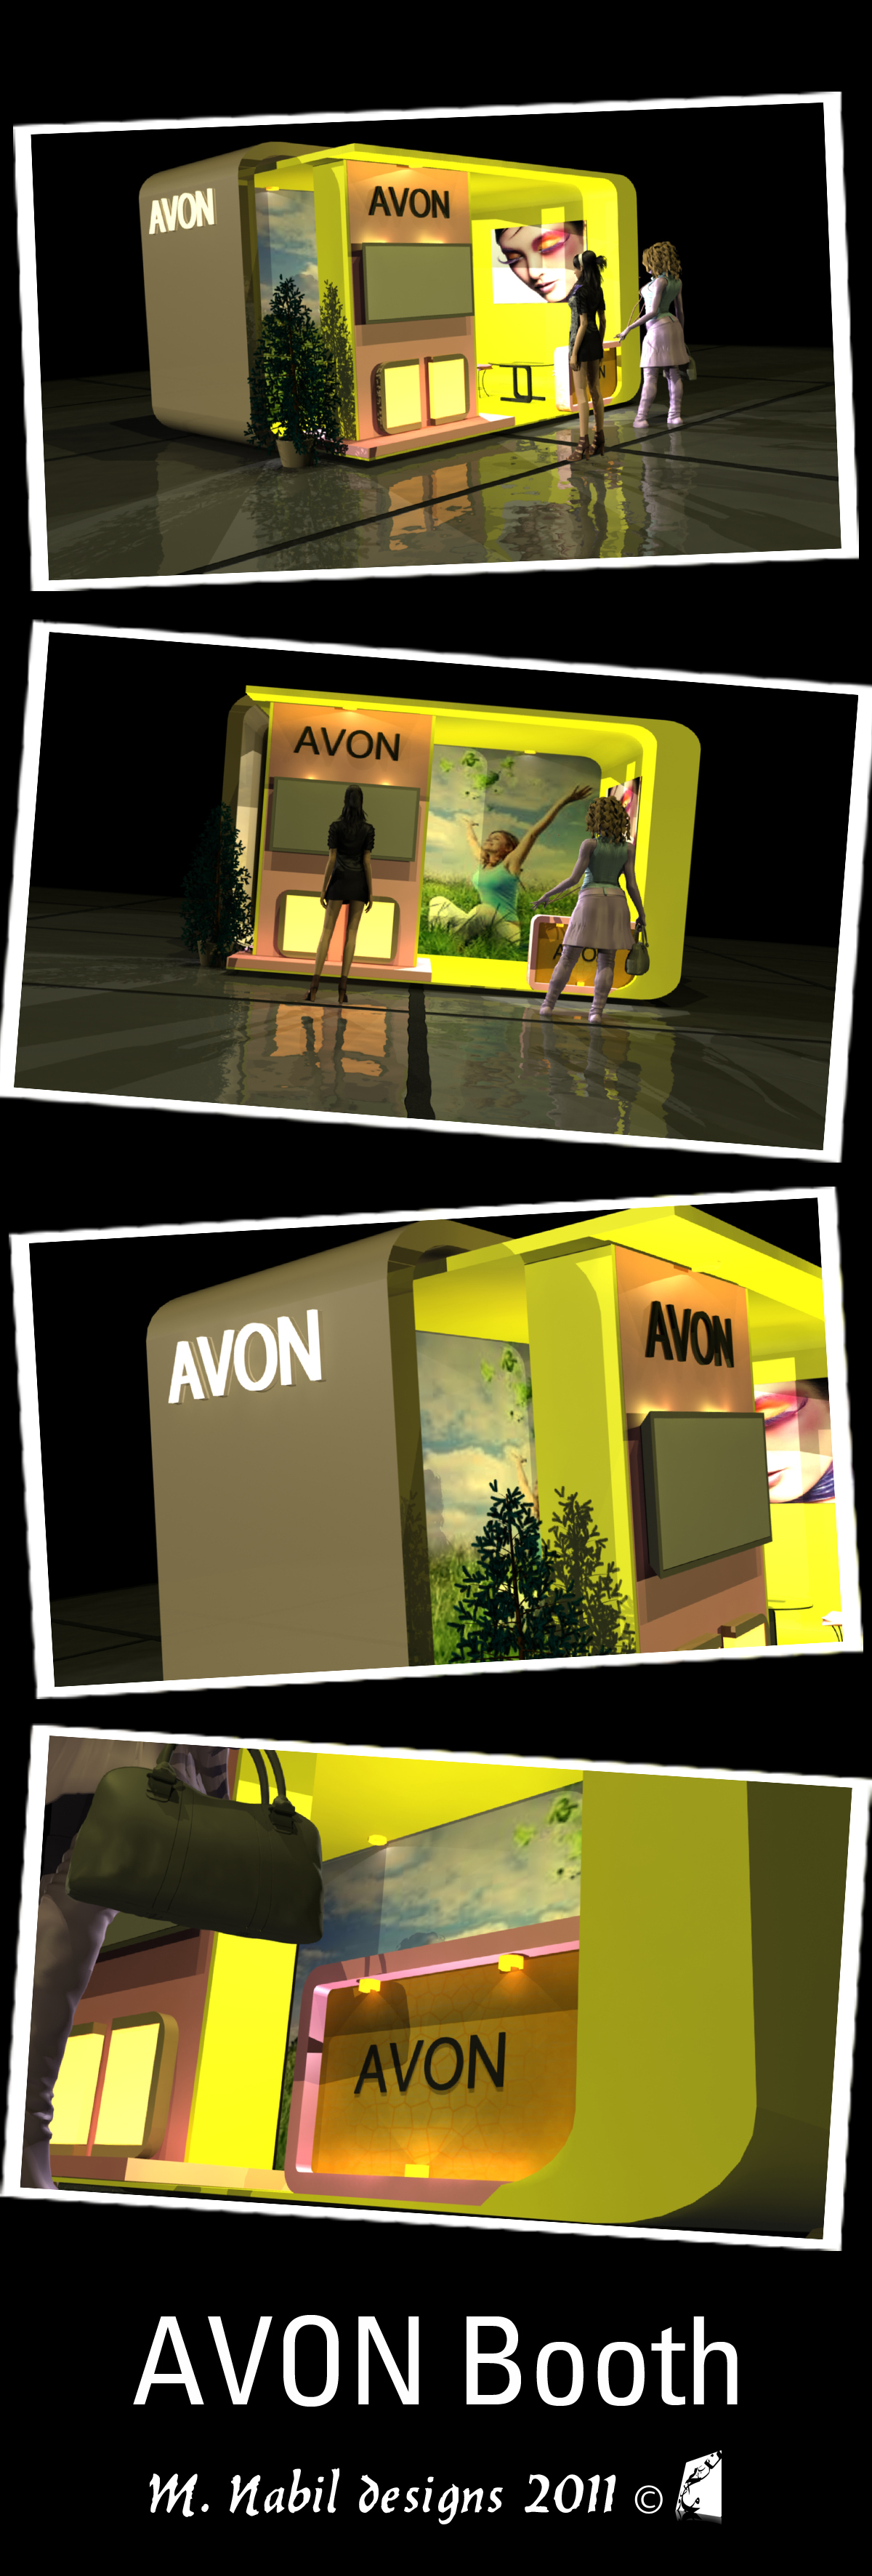 AVON Booth